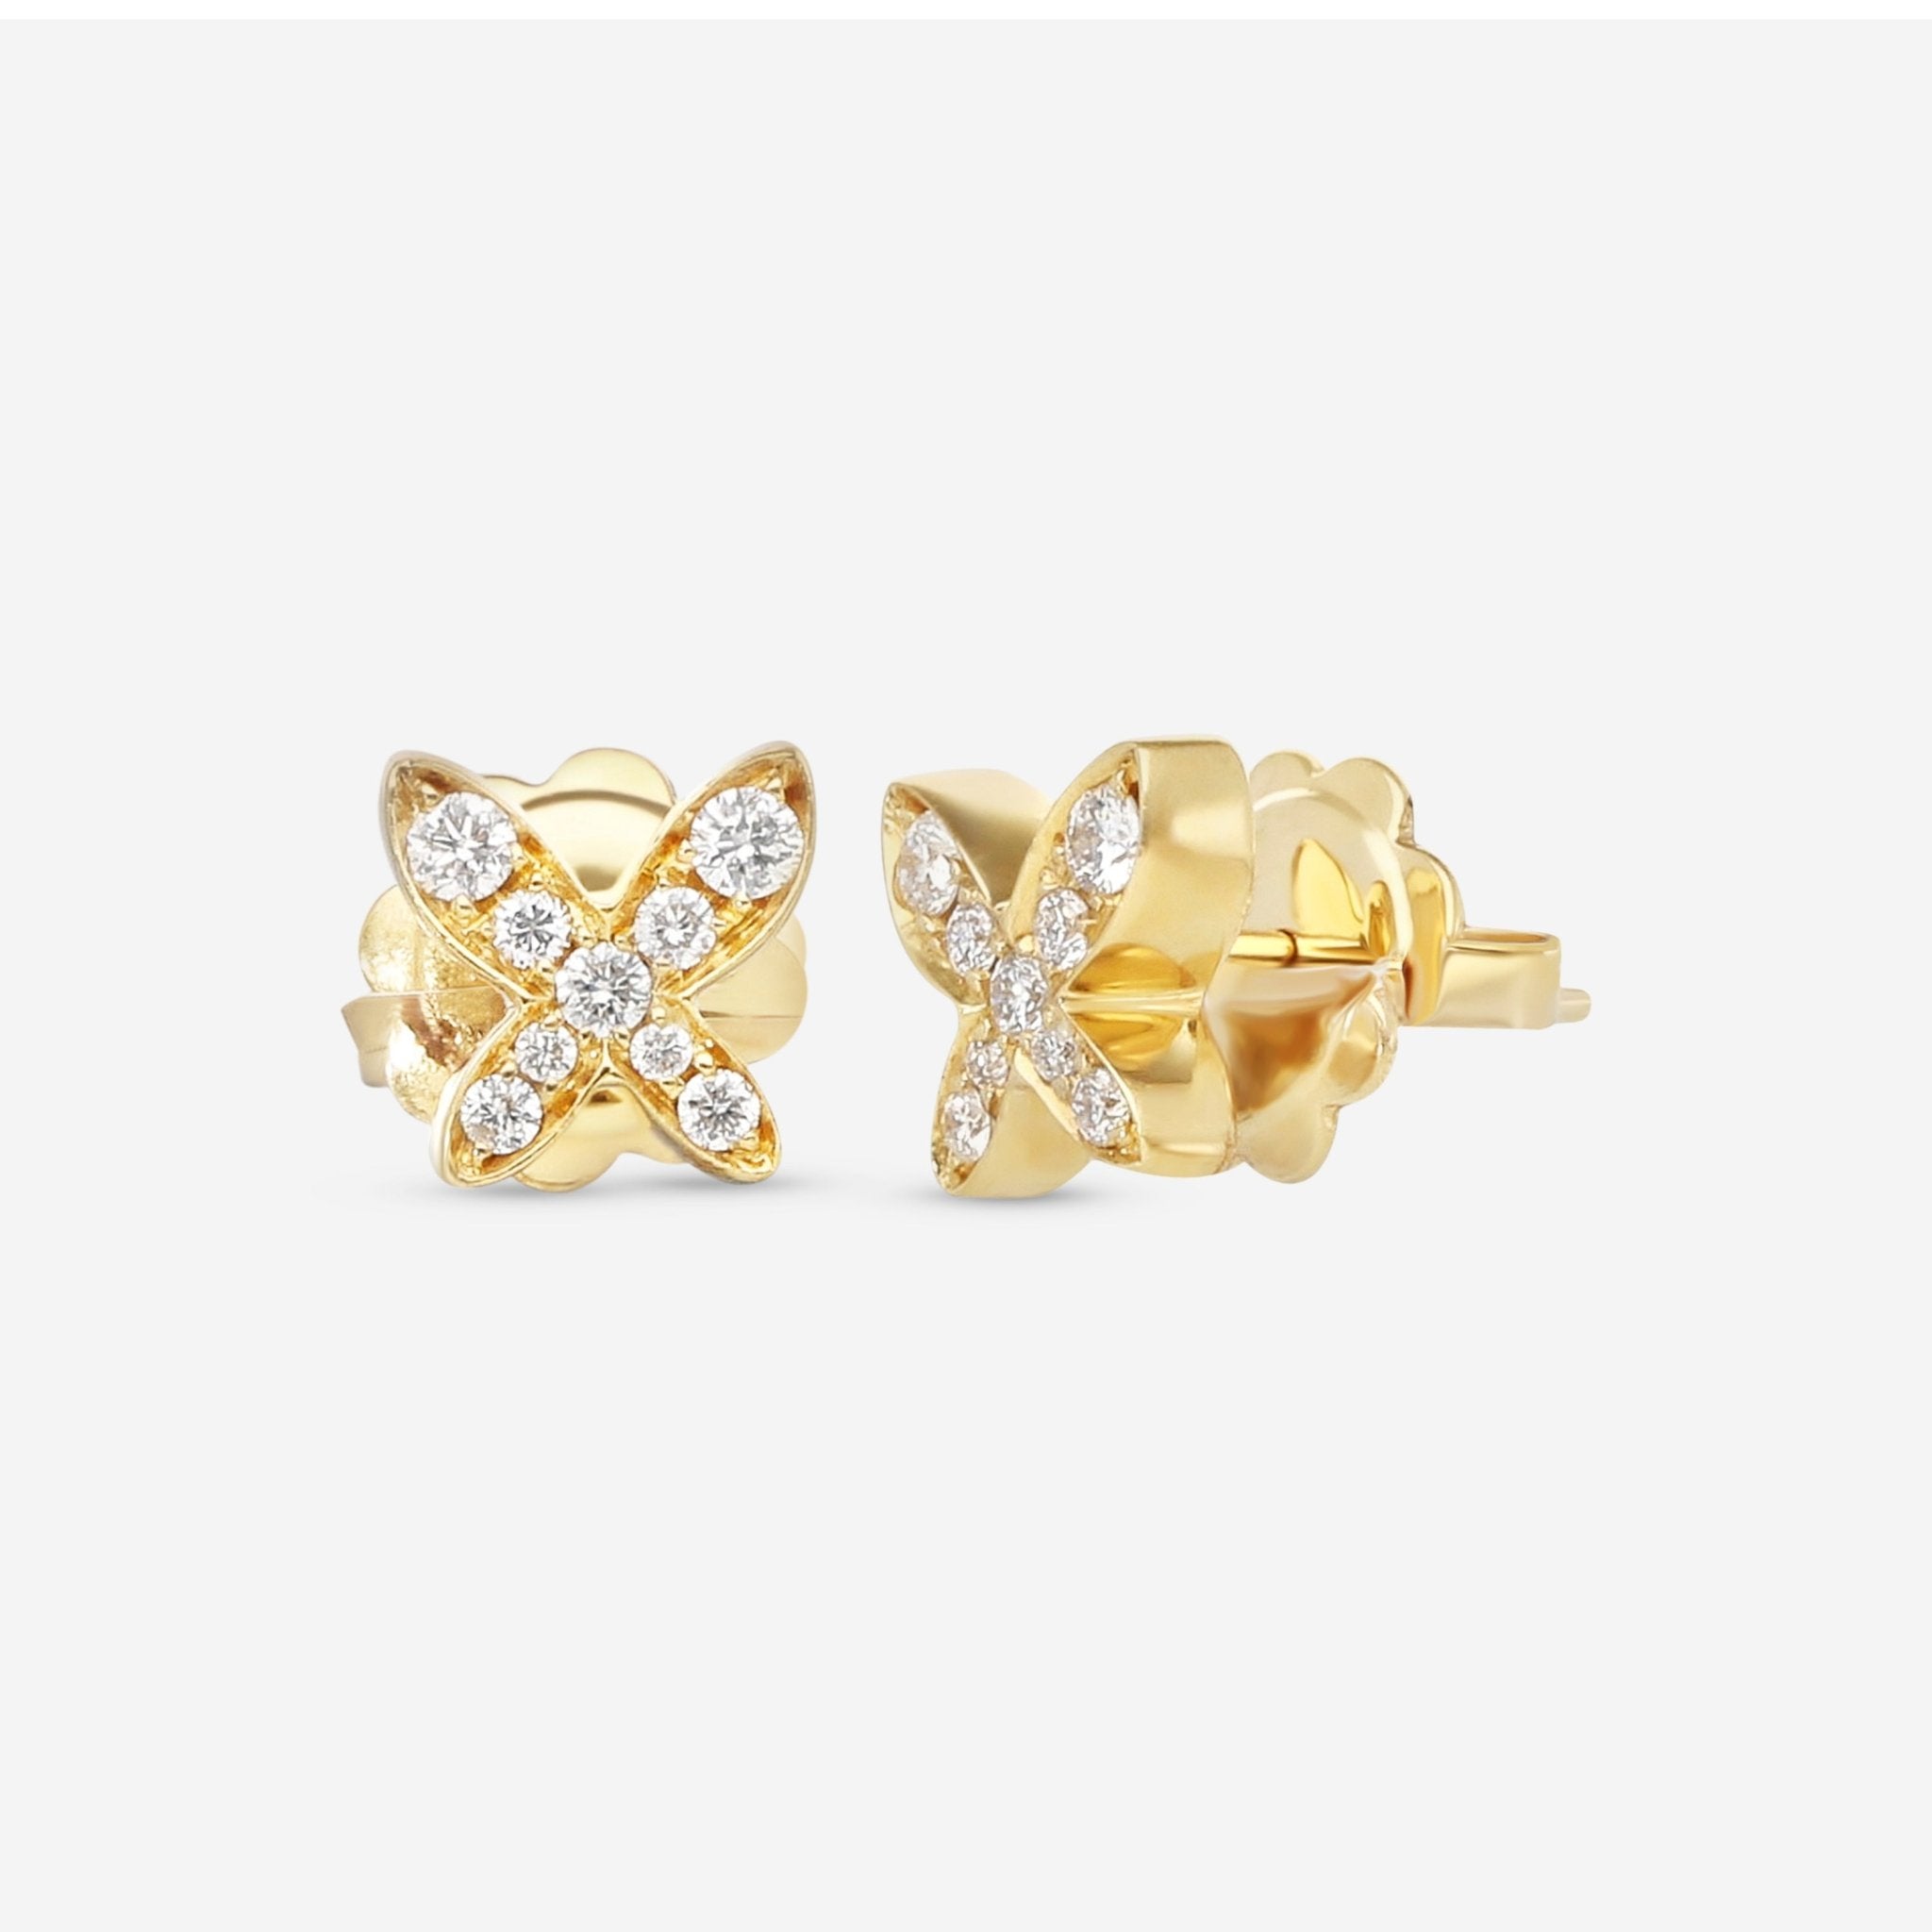 Mimi Milano Freevola 18K Yellow Gold, Diamond Stud Earrings OXM242G8B - THE SOLIST - Mimi Milano